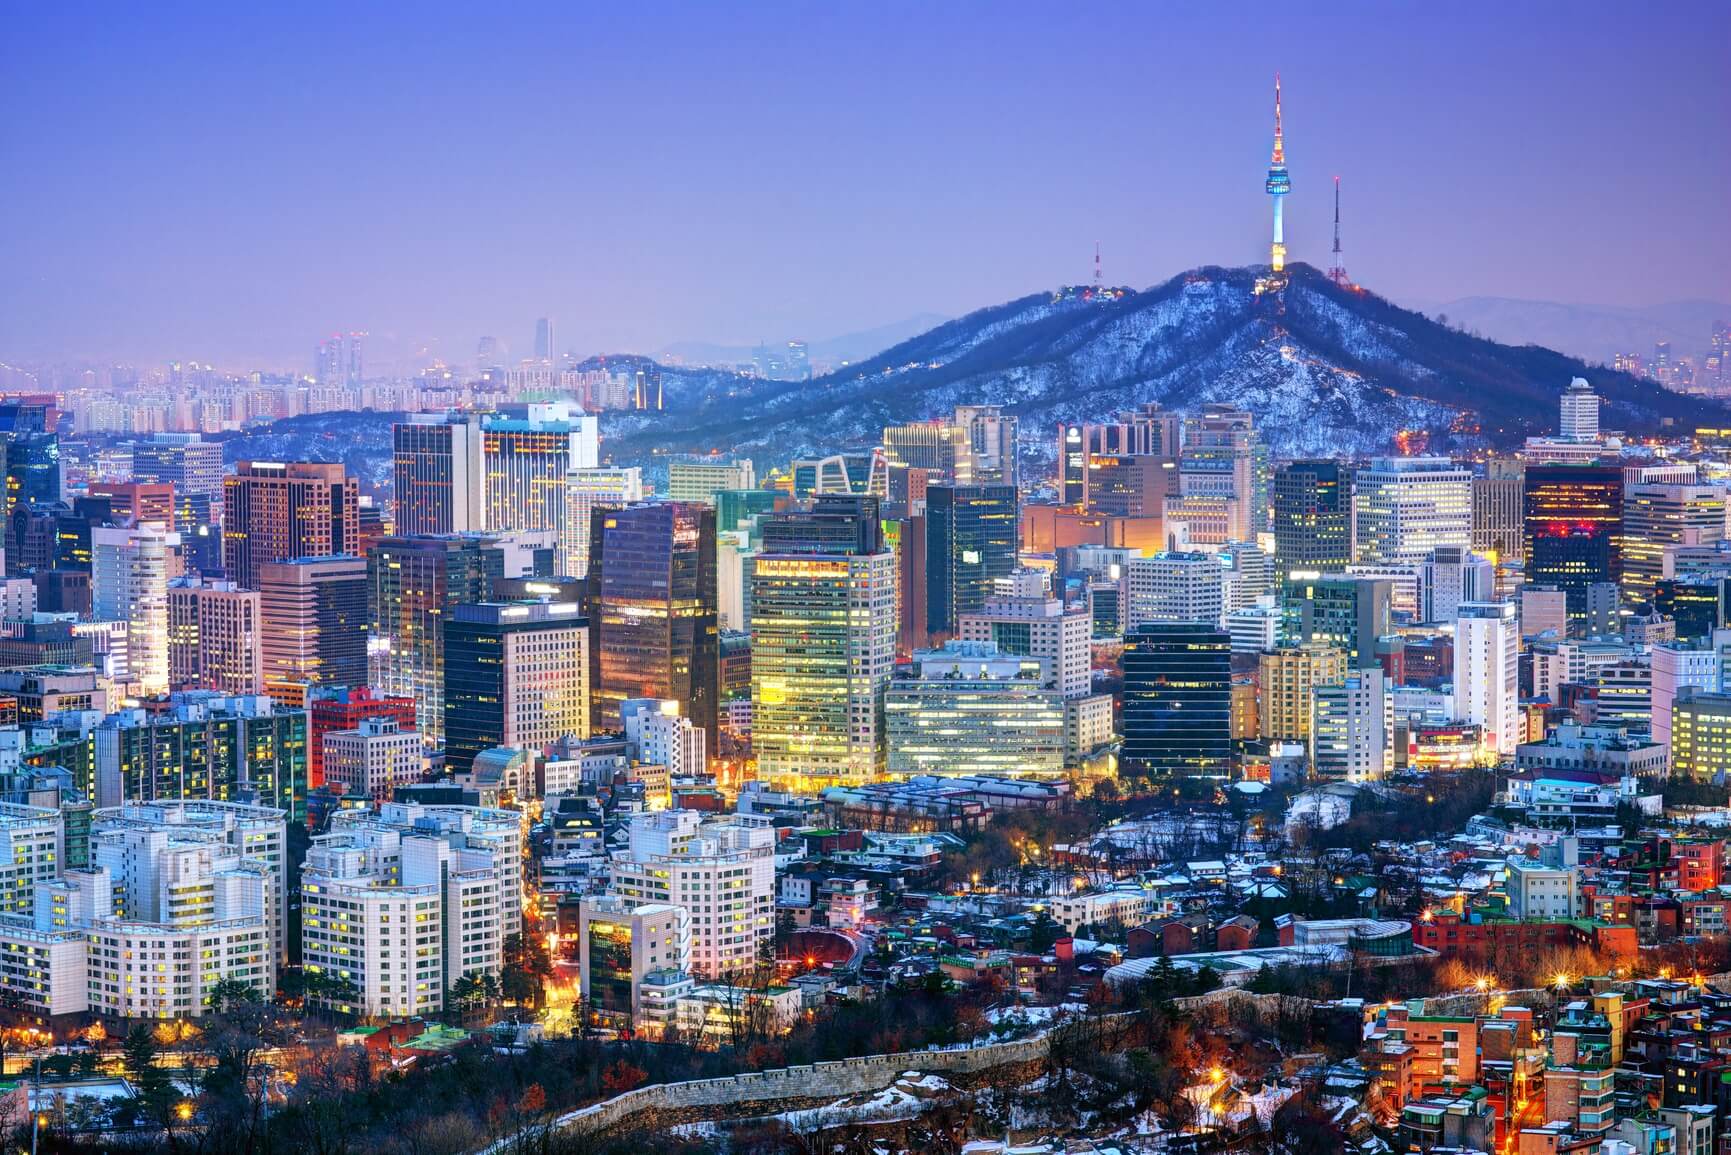 Flight deals from Geneva, Switzerland to Seoul, South Korea | Secret Flying